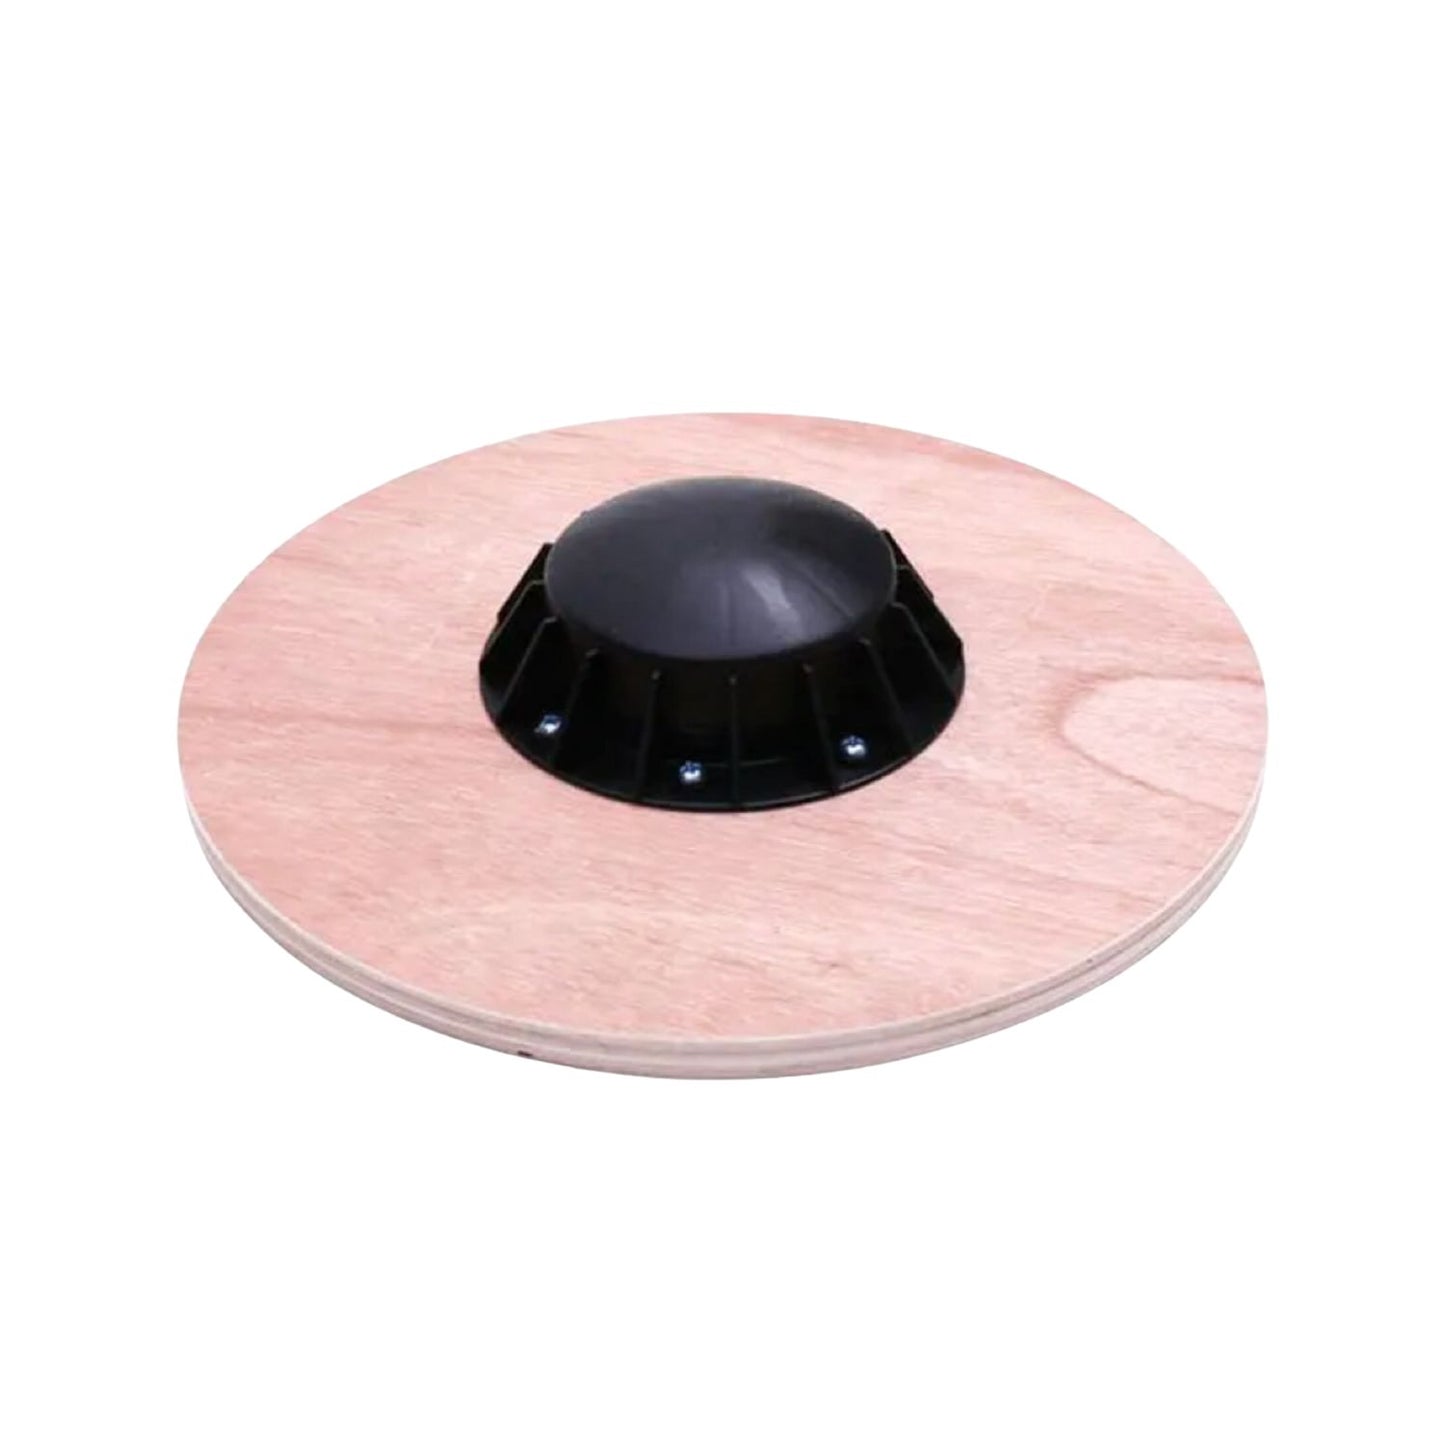 Verpeak Wooden Wobble Board with Non-Slip Pads (Black with Wood) VP-BT-102-BK